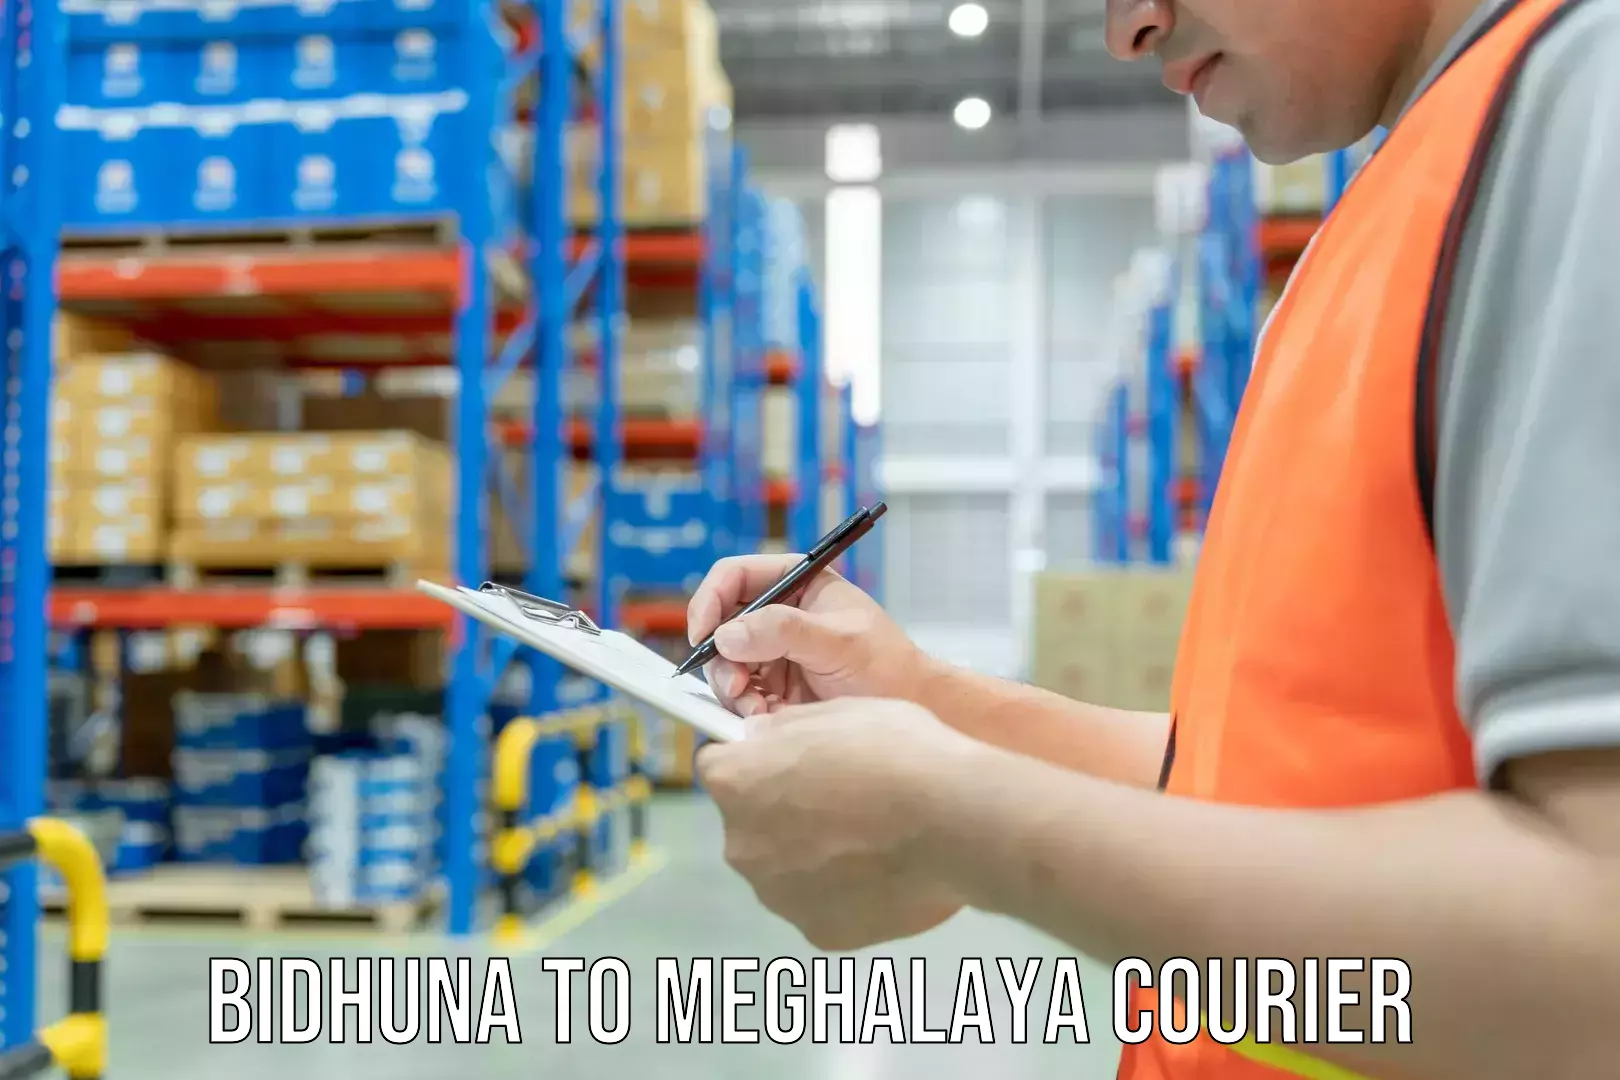 Courier service comparison Bidhuna to Meghalaya